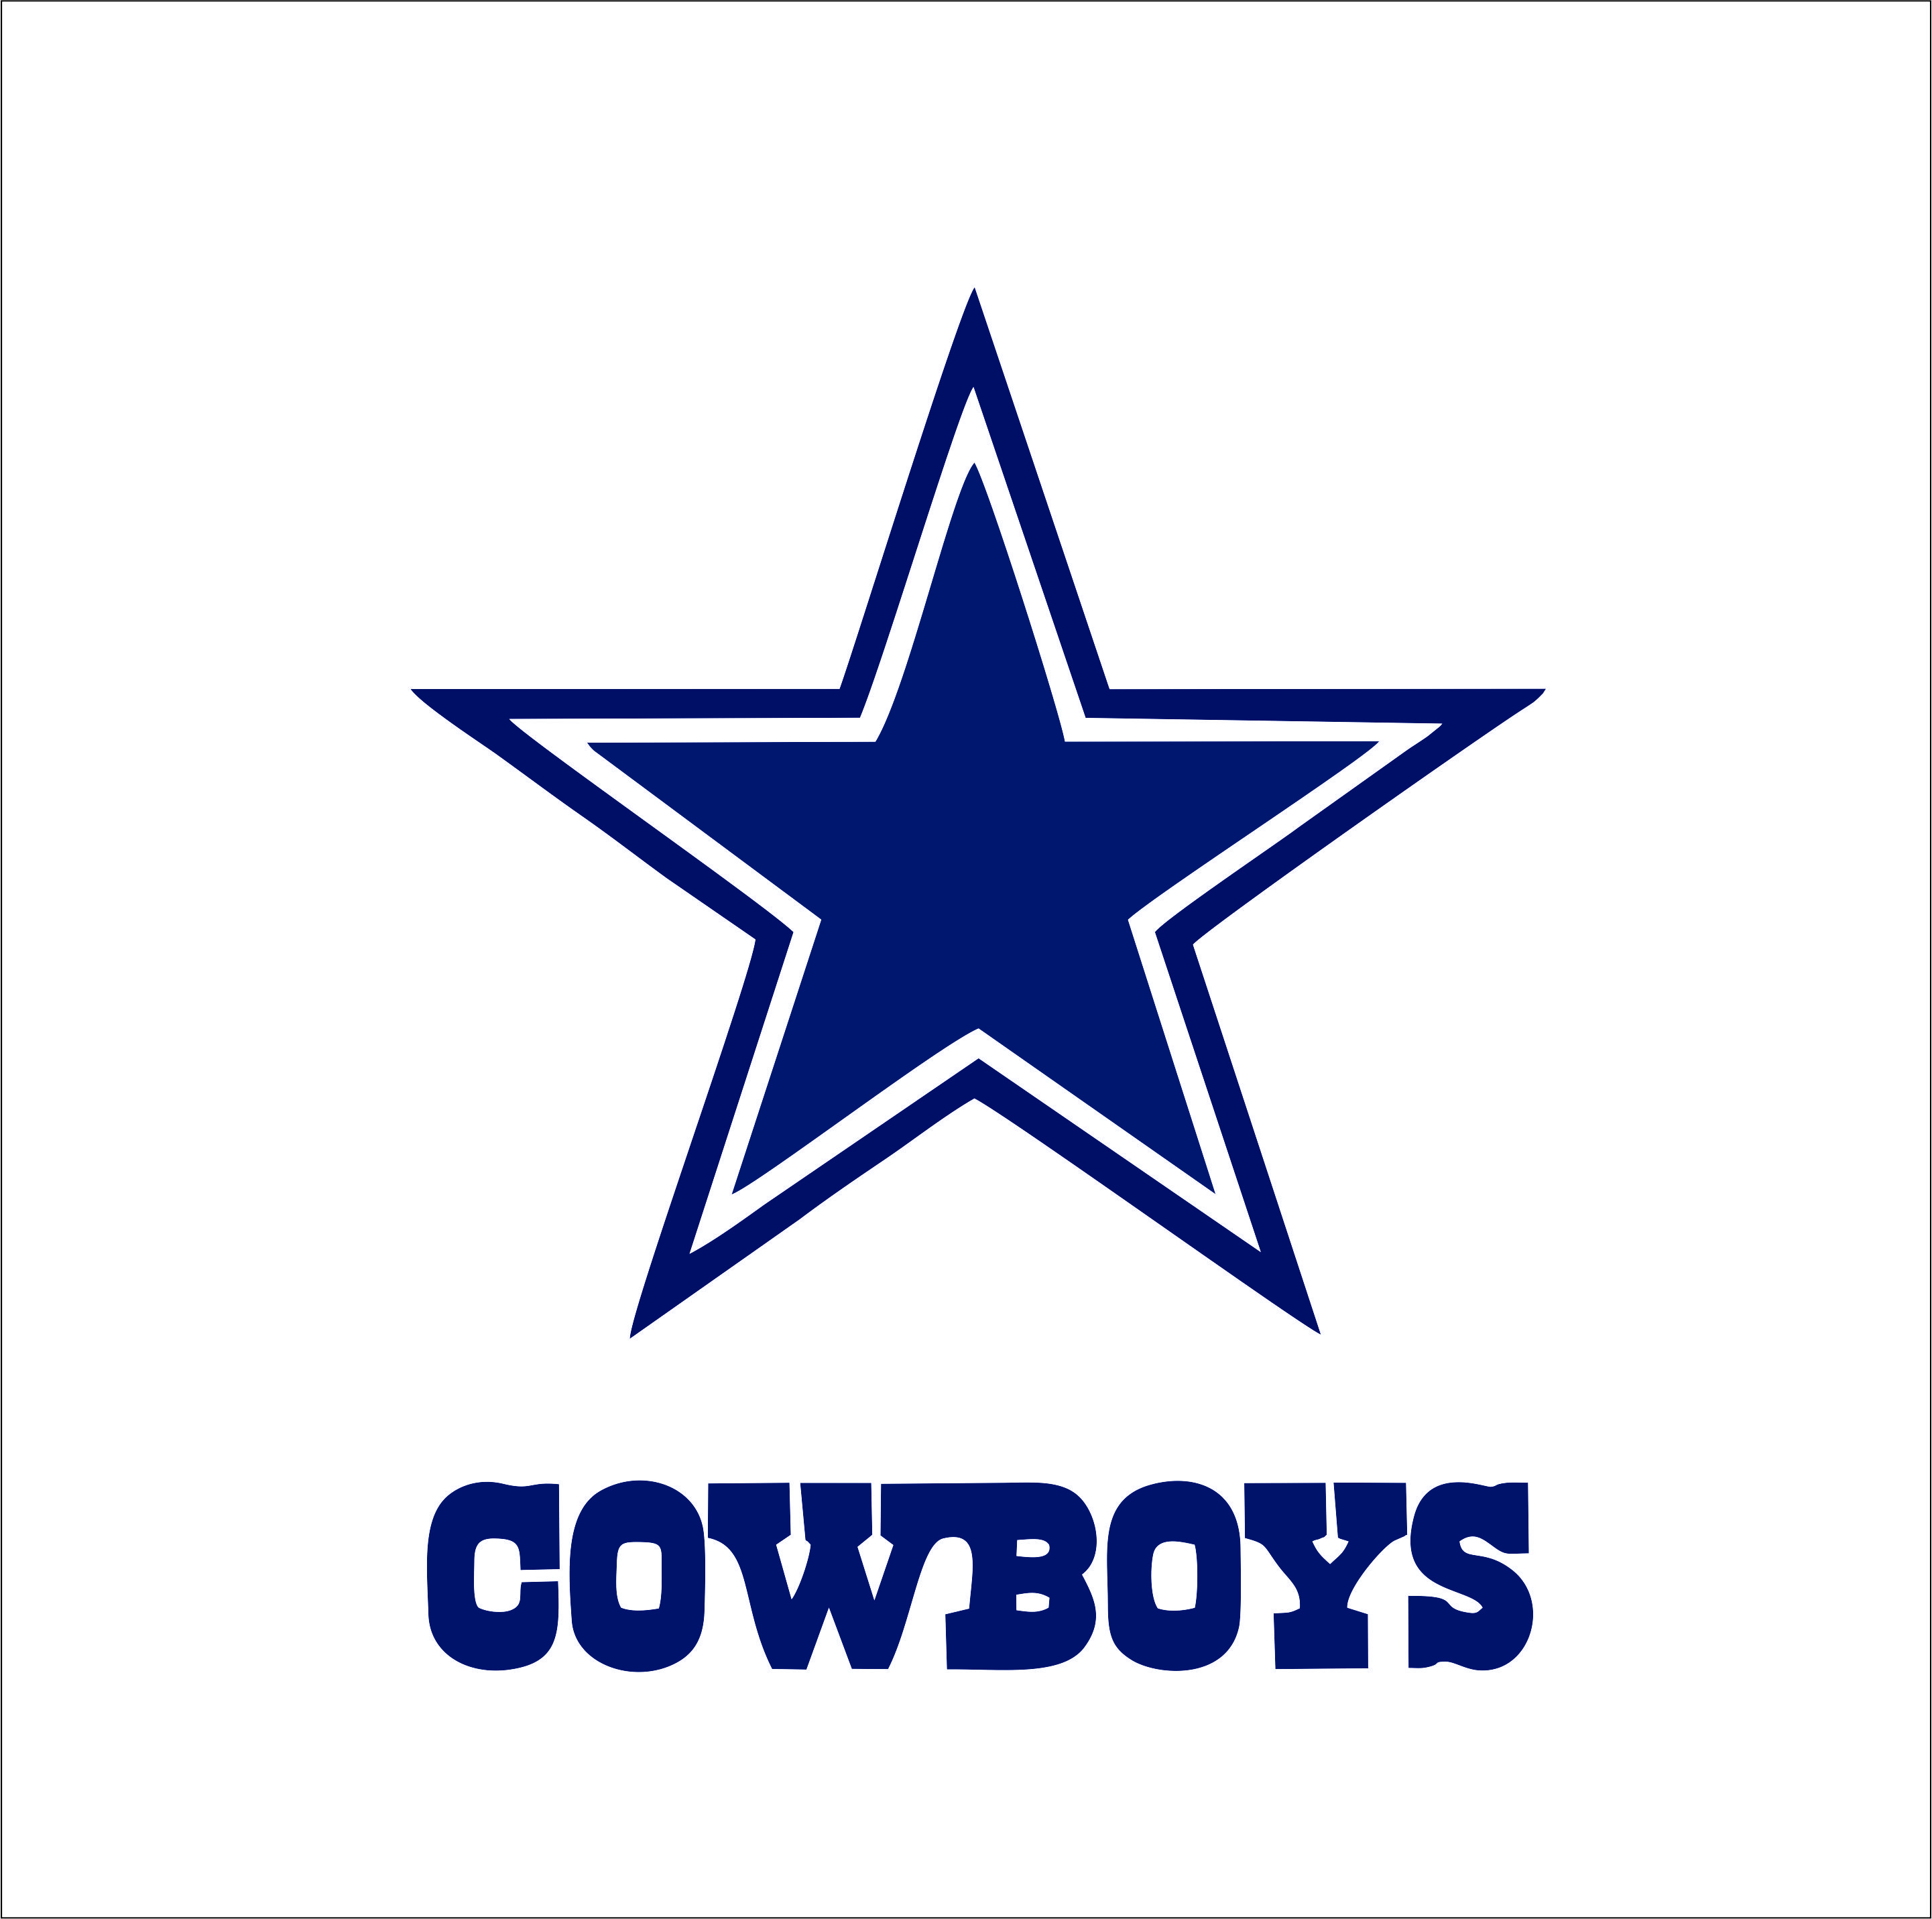 Dallas Cowboys Star Transpare